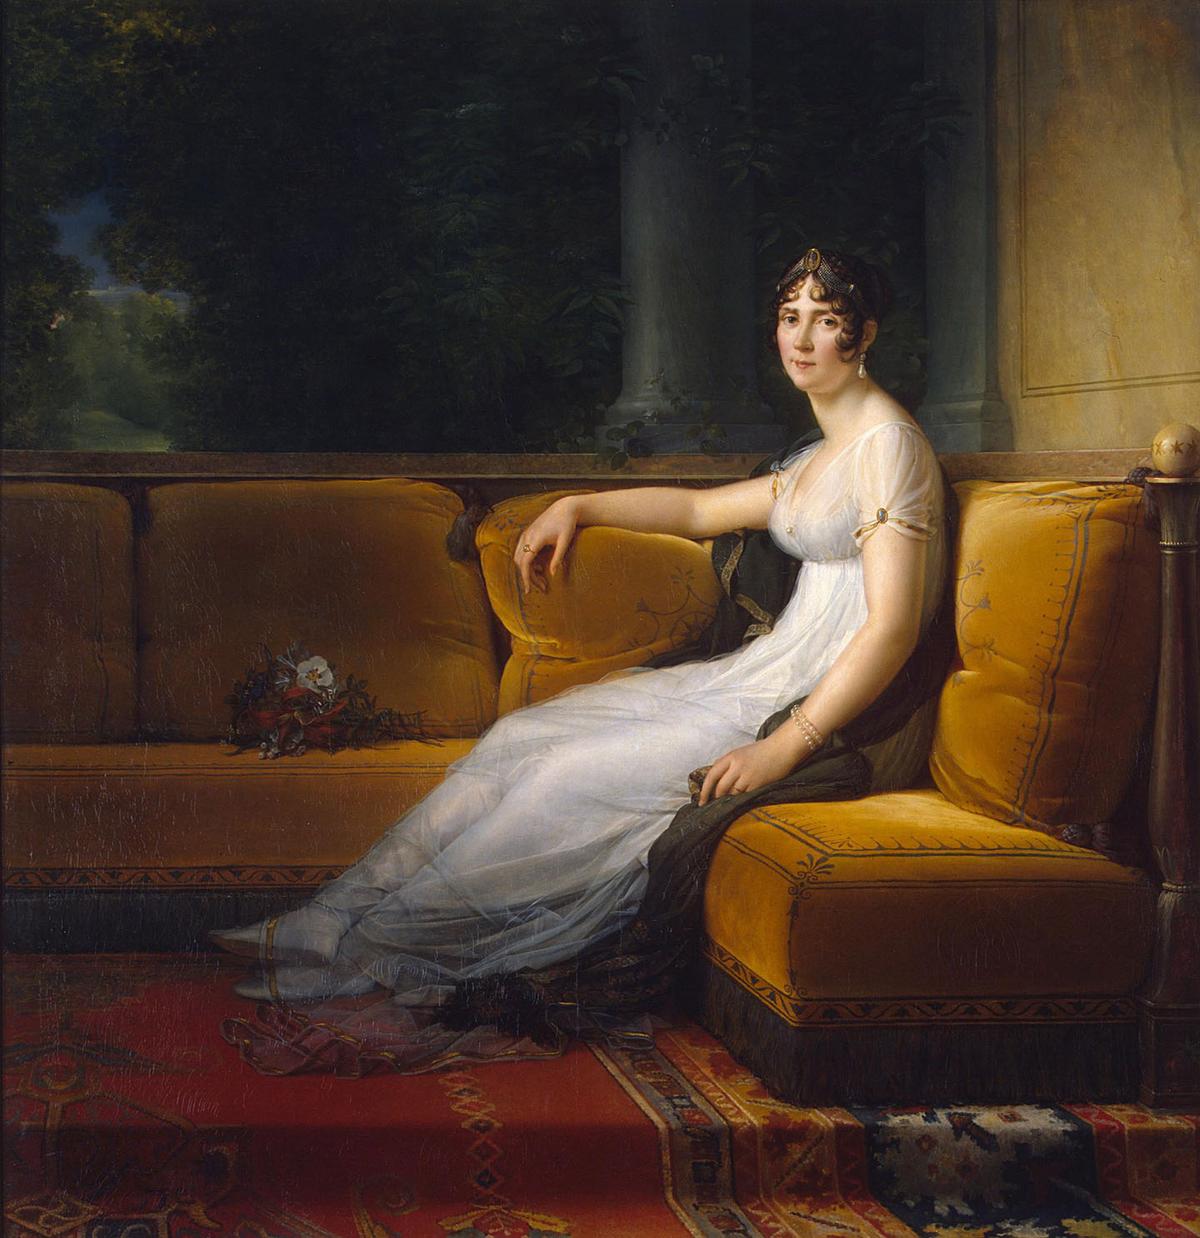 Portrait of Joséphine, the wife of Napoleon, 1801, by François Gérard. Oil on canvas. Hermitage Museum, St. Petersburg, Russia. (Public Domain)